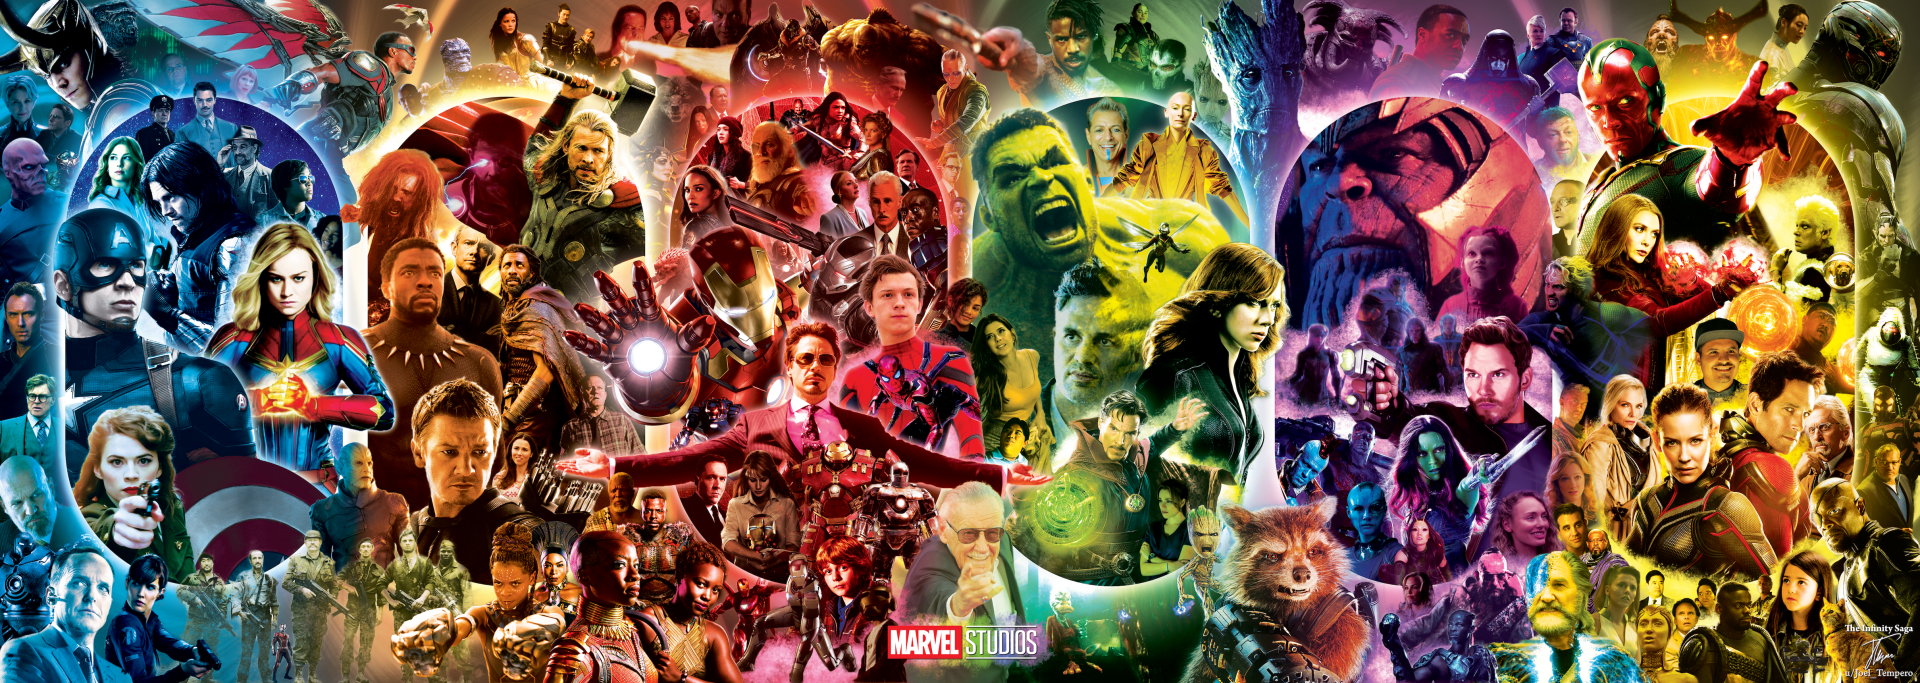 Avengers Endgame Nebula PNG by Metropolis-Hero1125